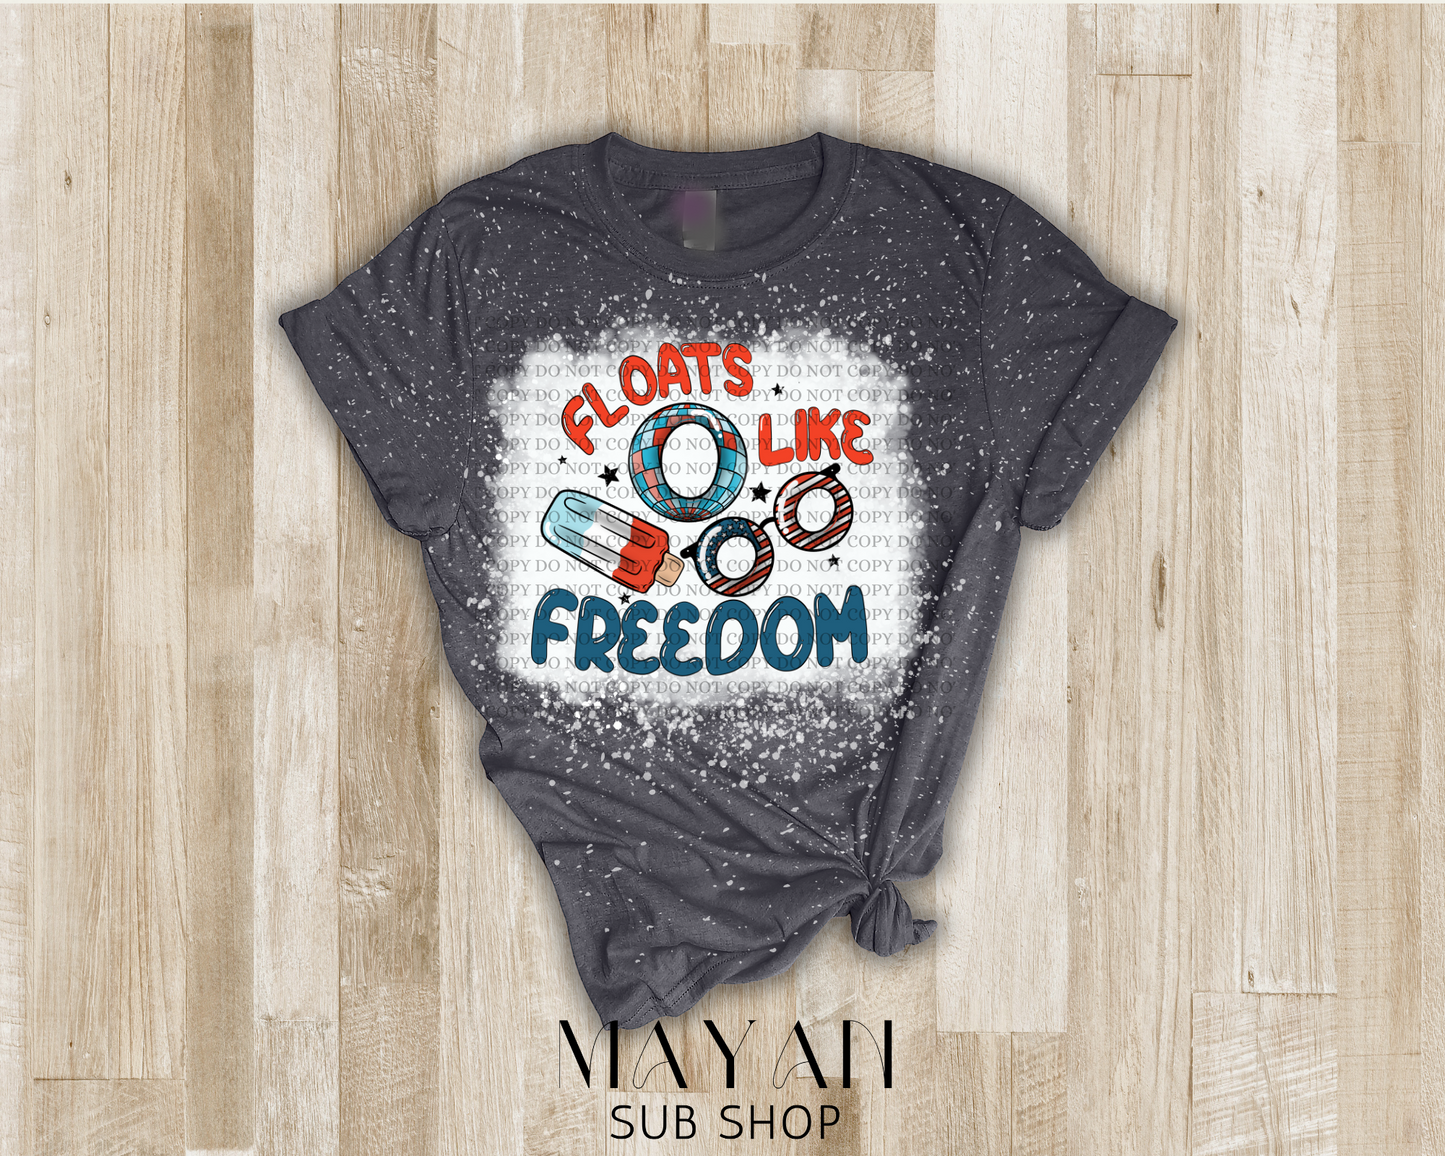 Floats like freedom bleached shirt - Mayan Sub Shop